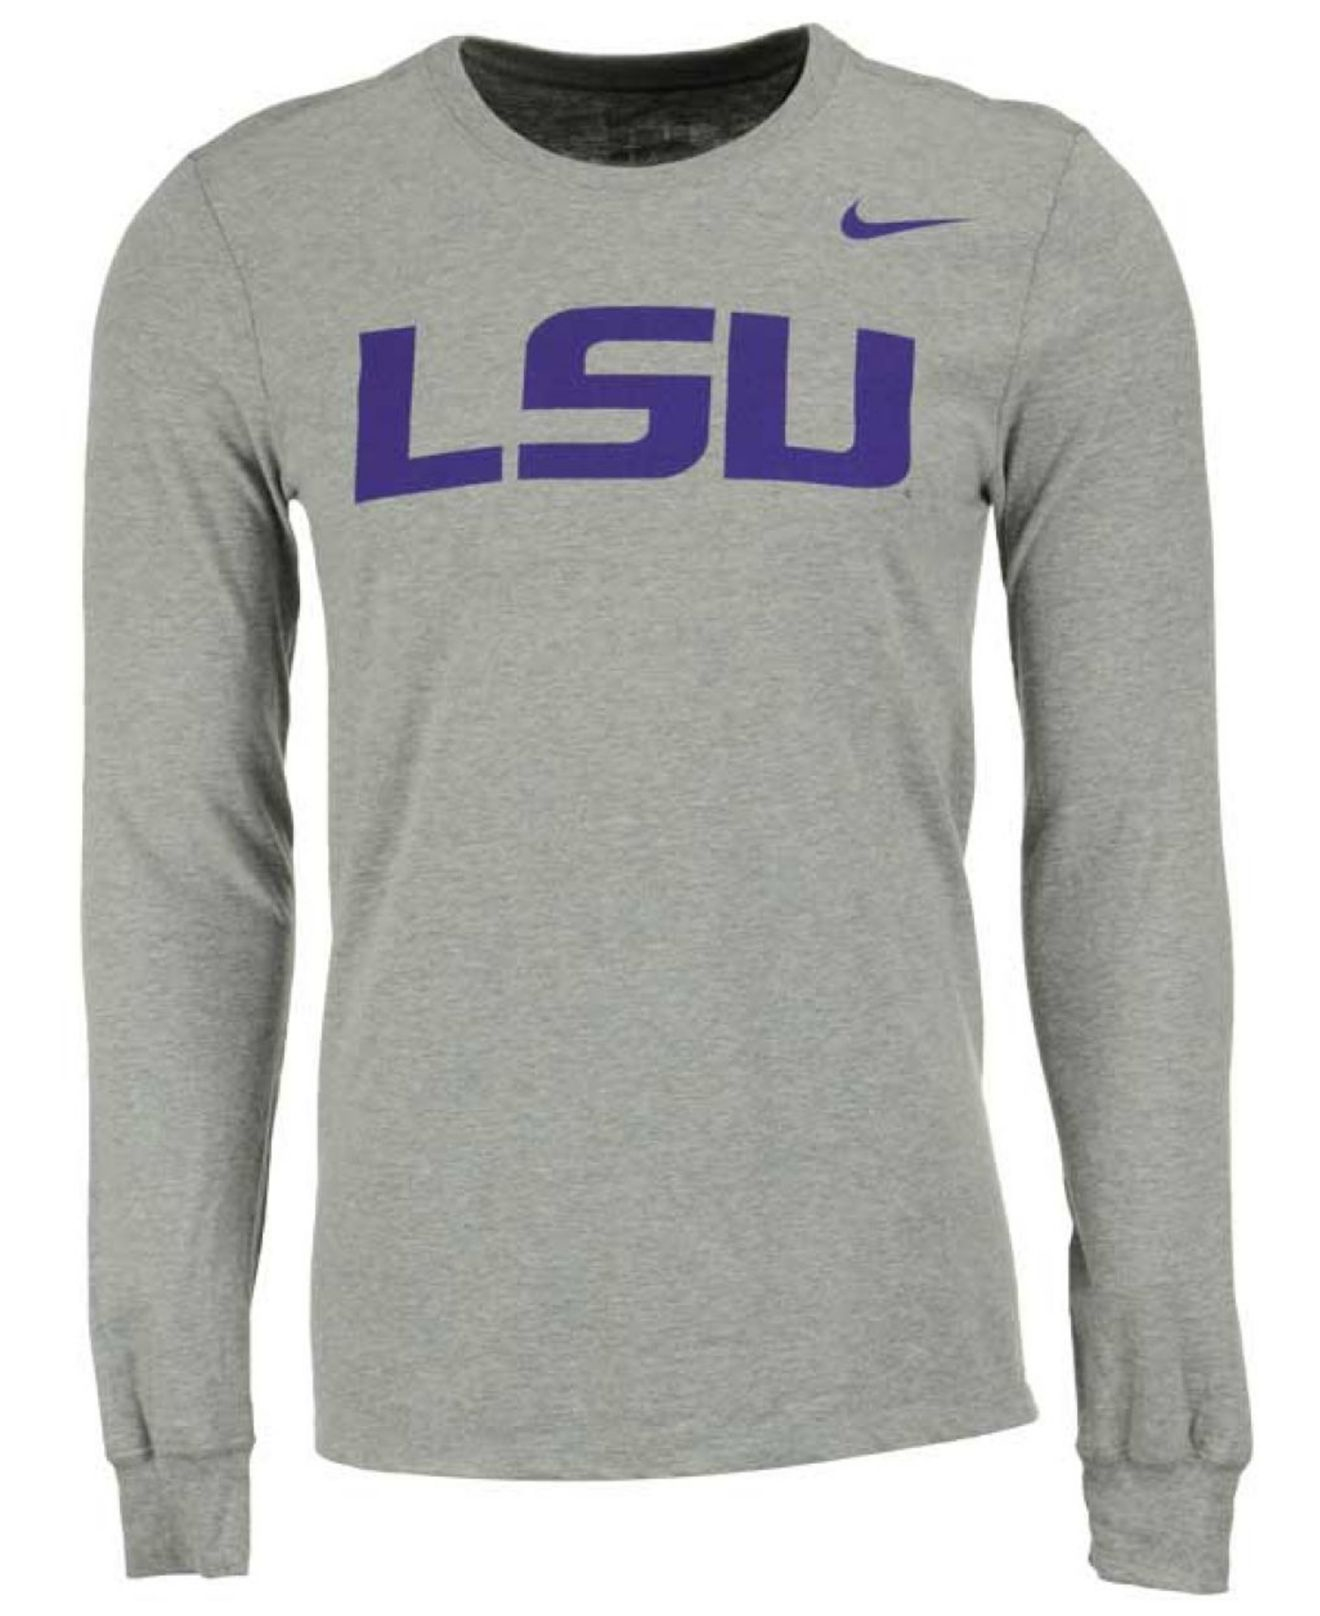 Lyst - Nike Men's Long-sleeve Lsu Tigers Wordmark T-shirt in Gray for Men